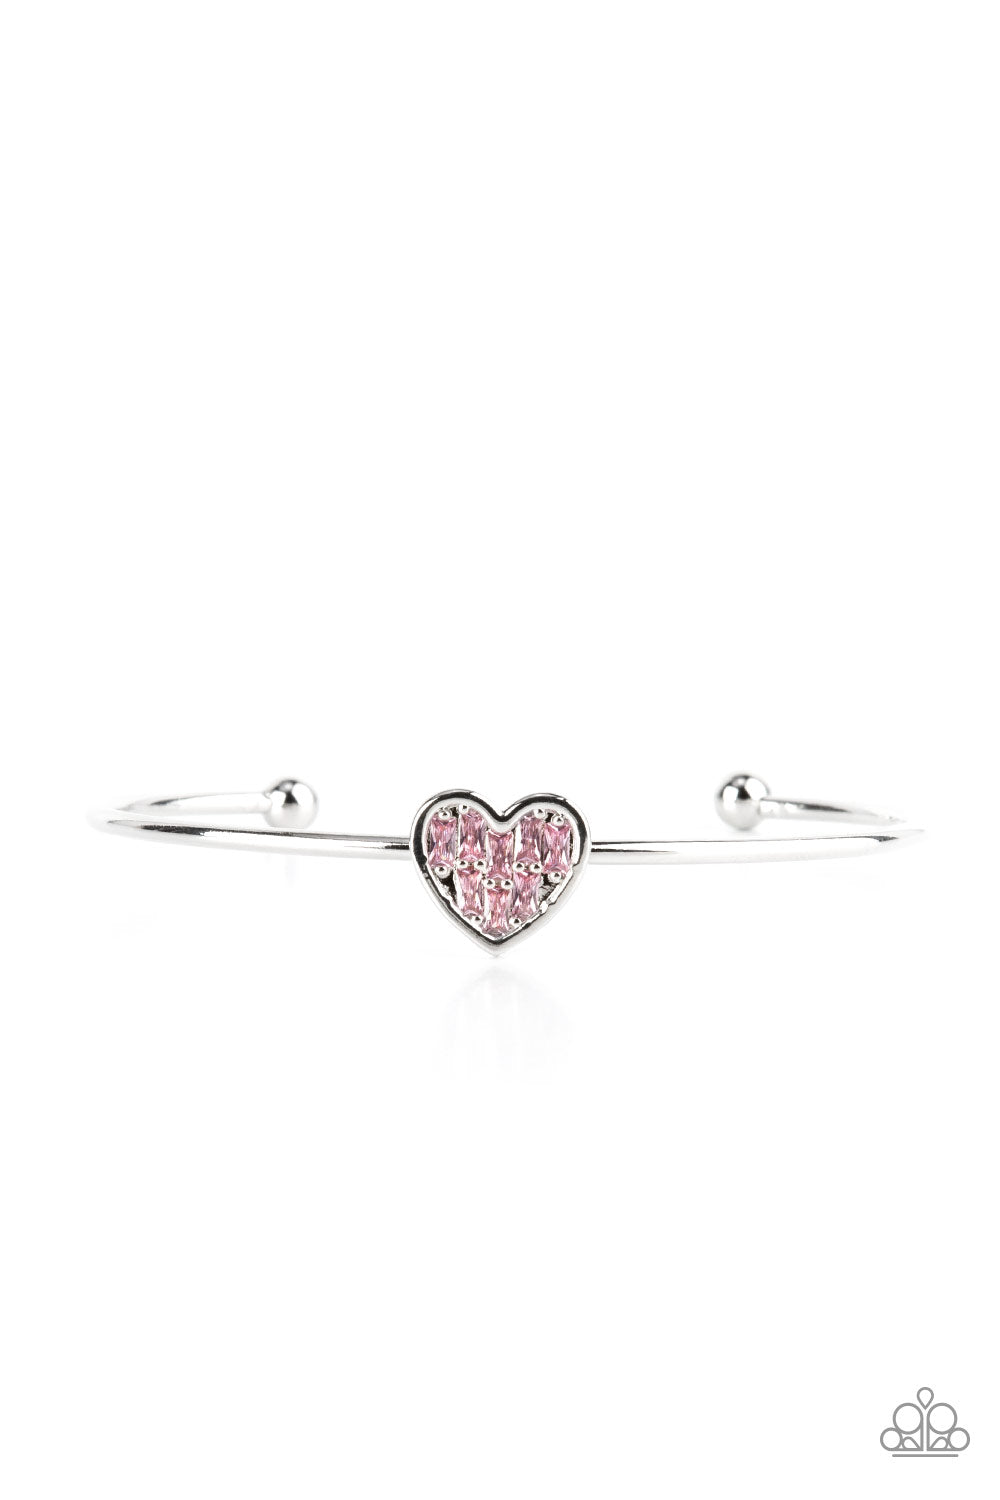 Heart of Ice - Pink Cuff Bracelet - Princess Glam Shop